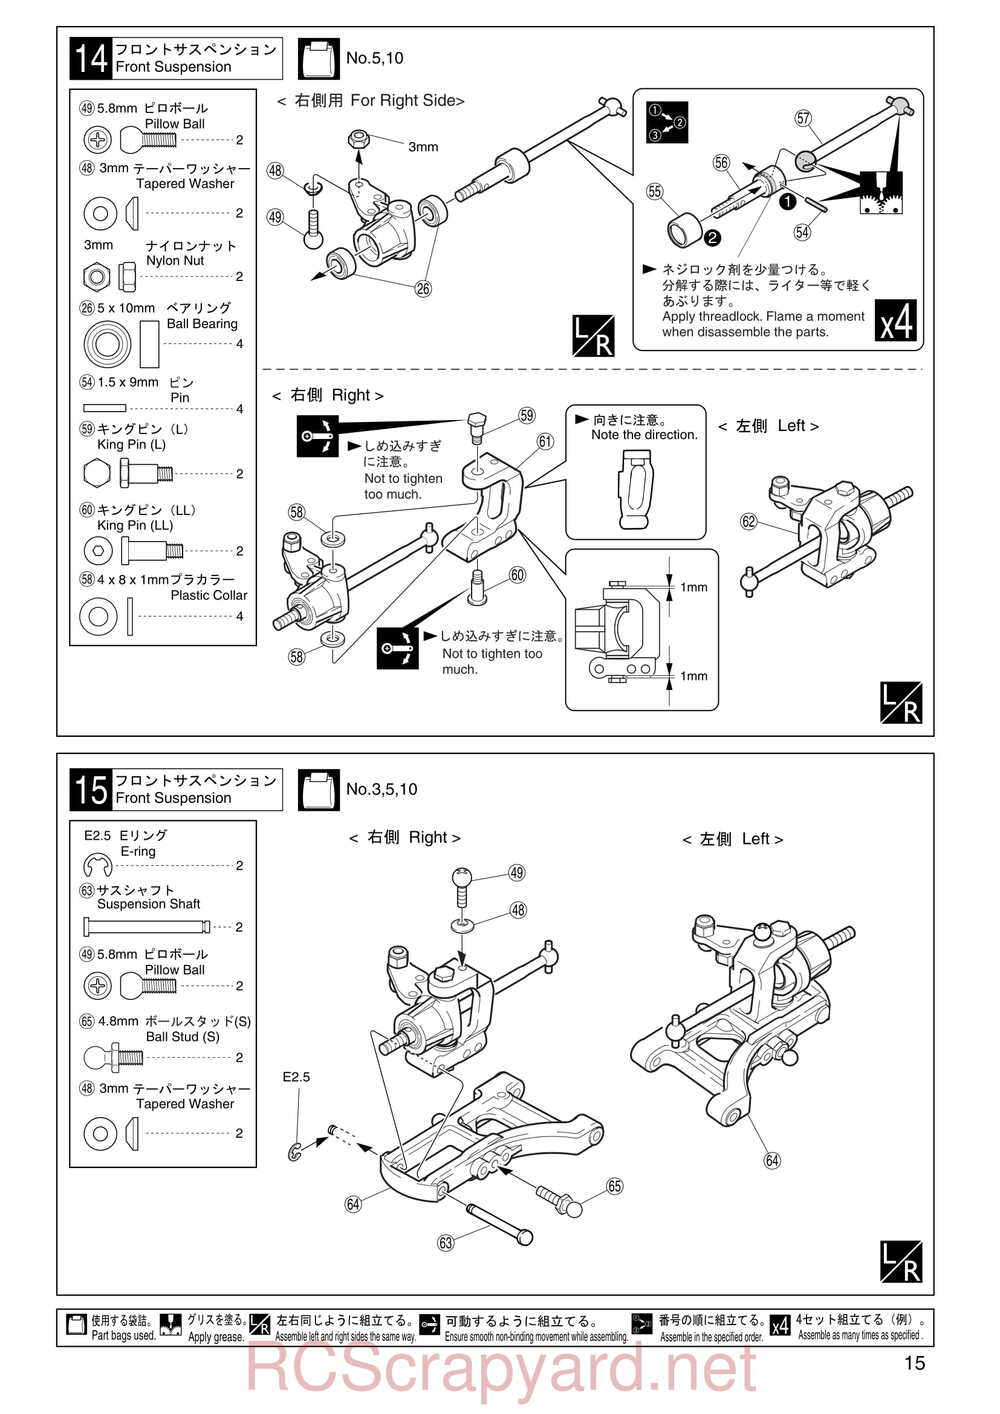 Kyosho - 30101 - KX-One - Manual - Page 15